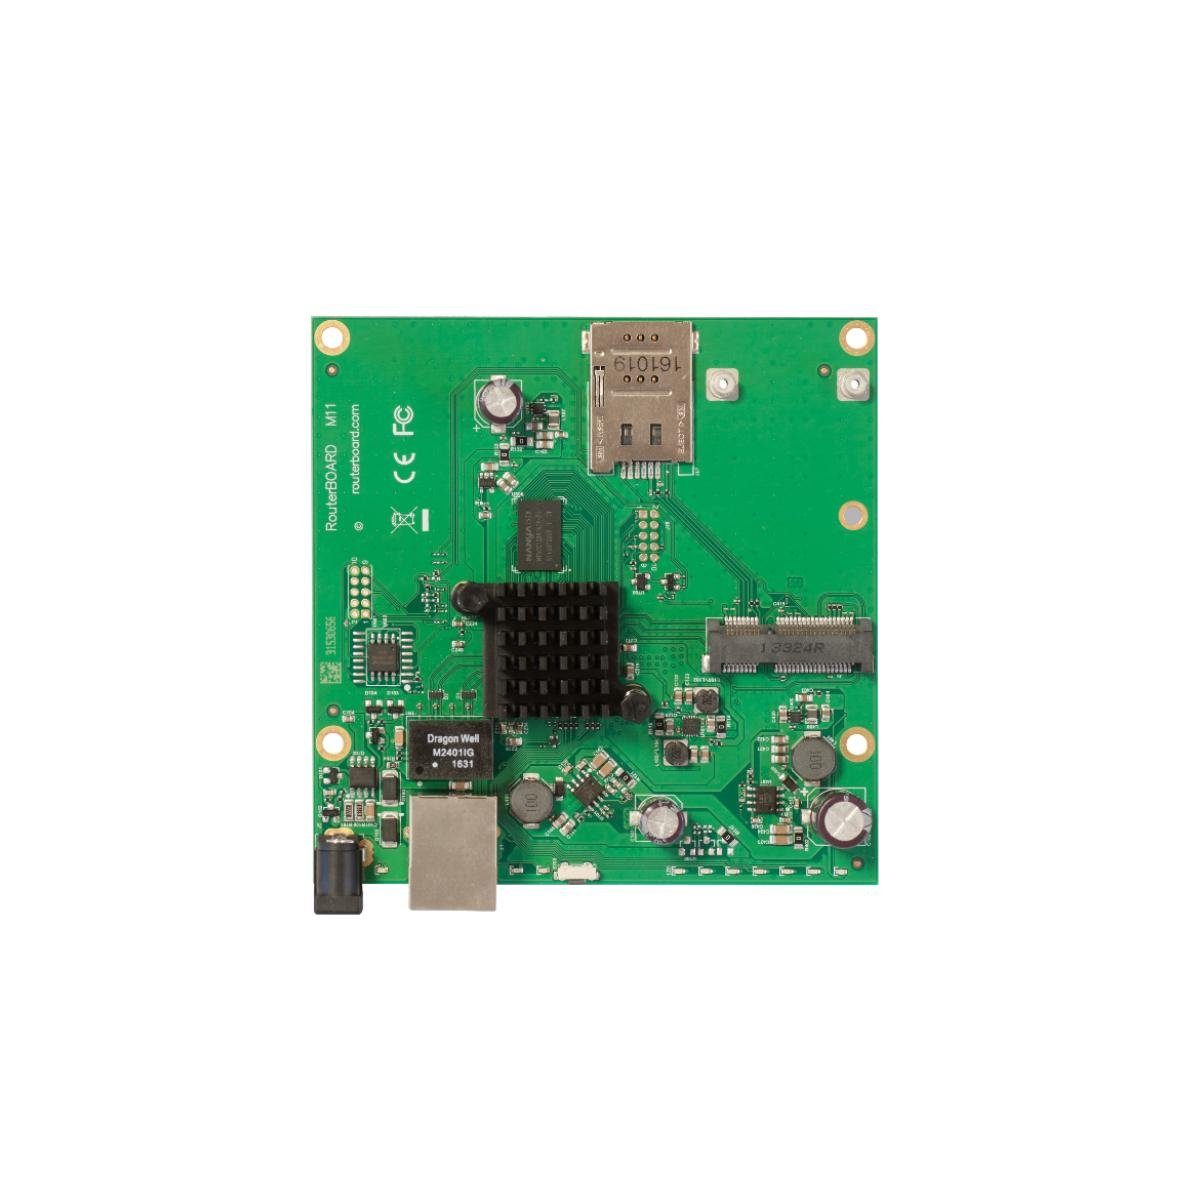 MikroTik RBM11G - RouterBOARD M11G mit Dual Core 880 MHz CPU, 256 MB RAM Netzwerk-Switch